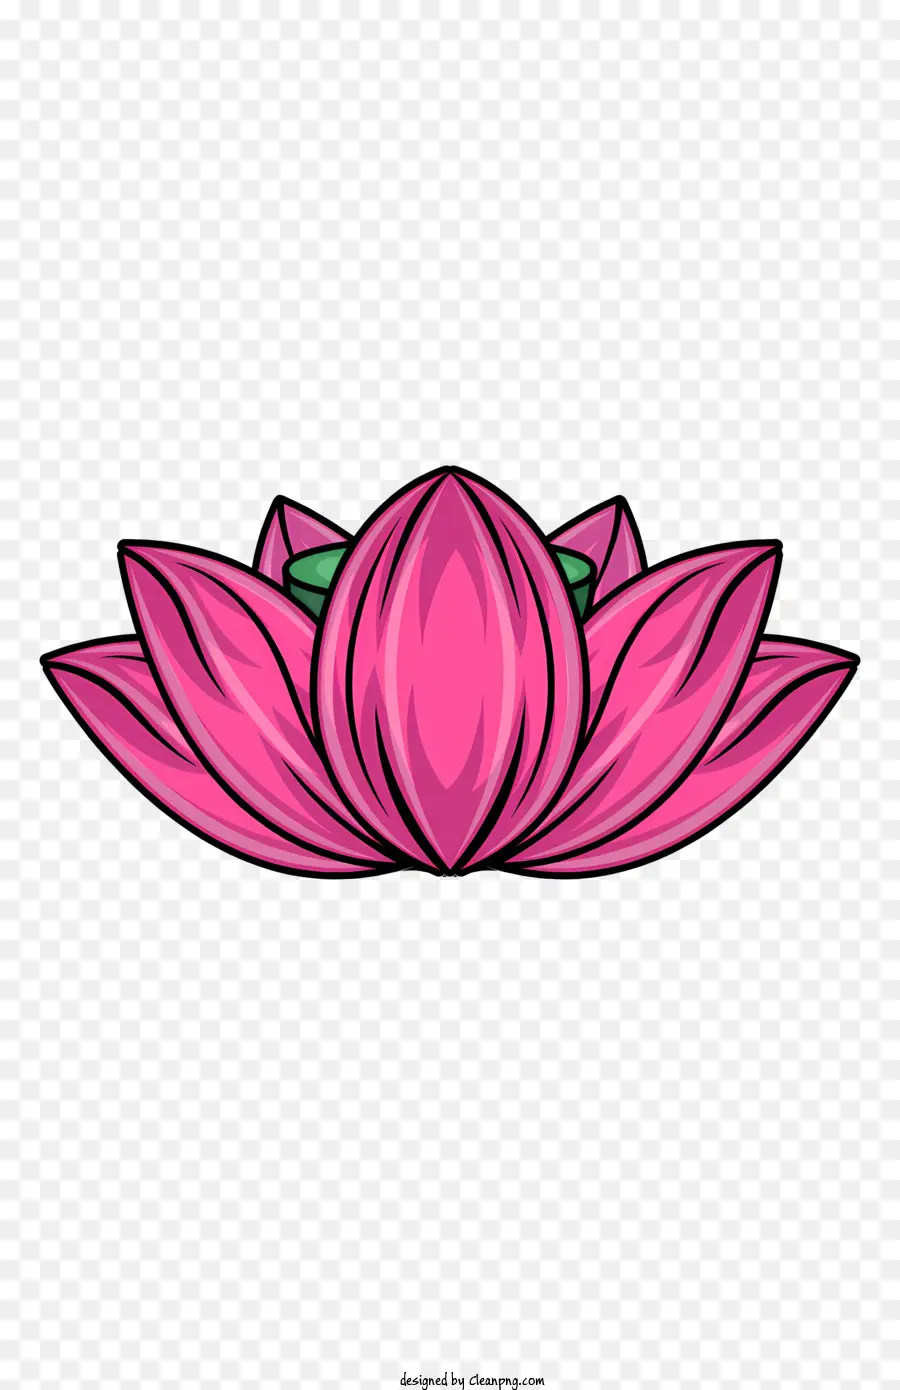 eyeball pink lotus flower petals stamen light green center